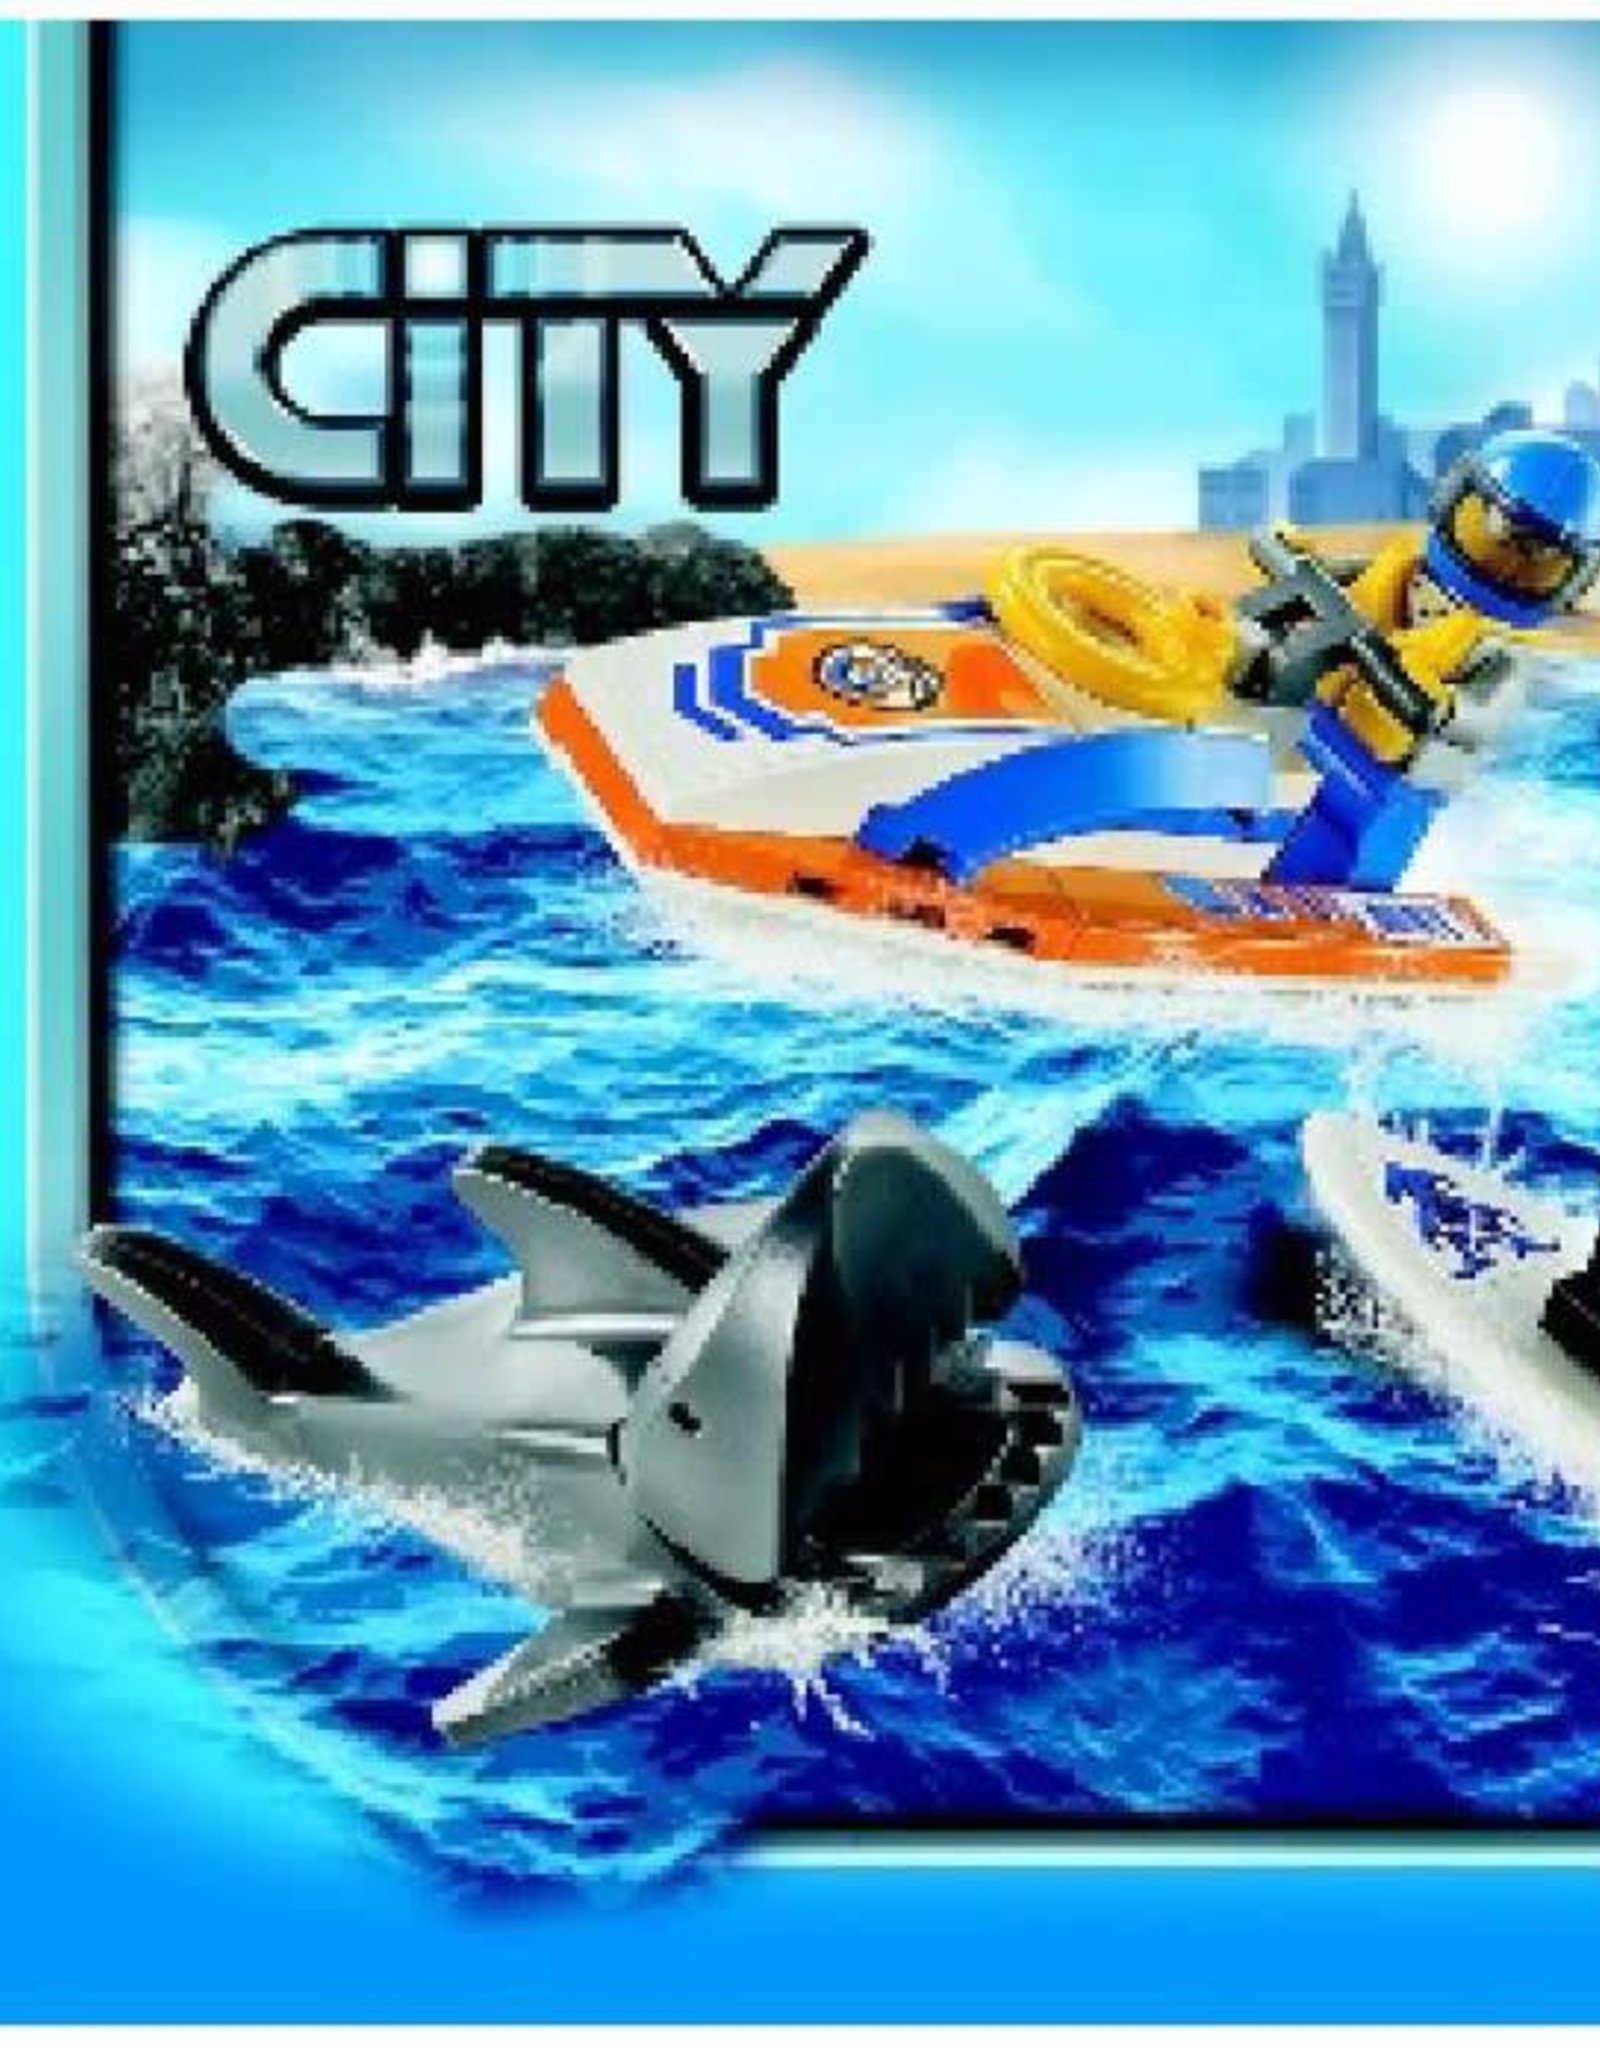 LEGO LEGO 60011 Surfer Rescue CITY